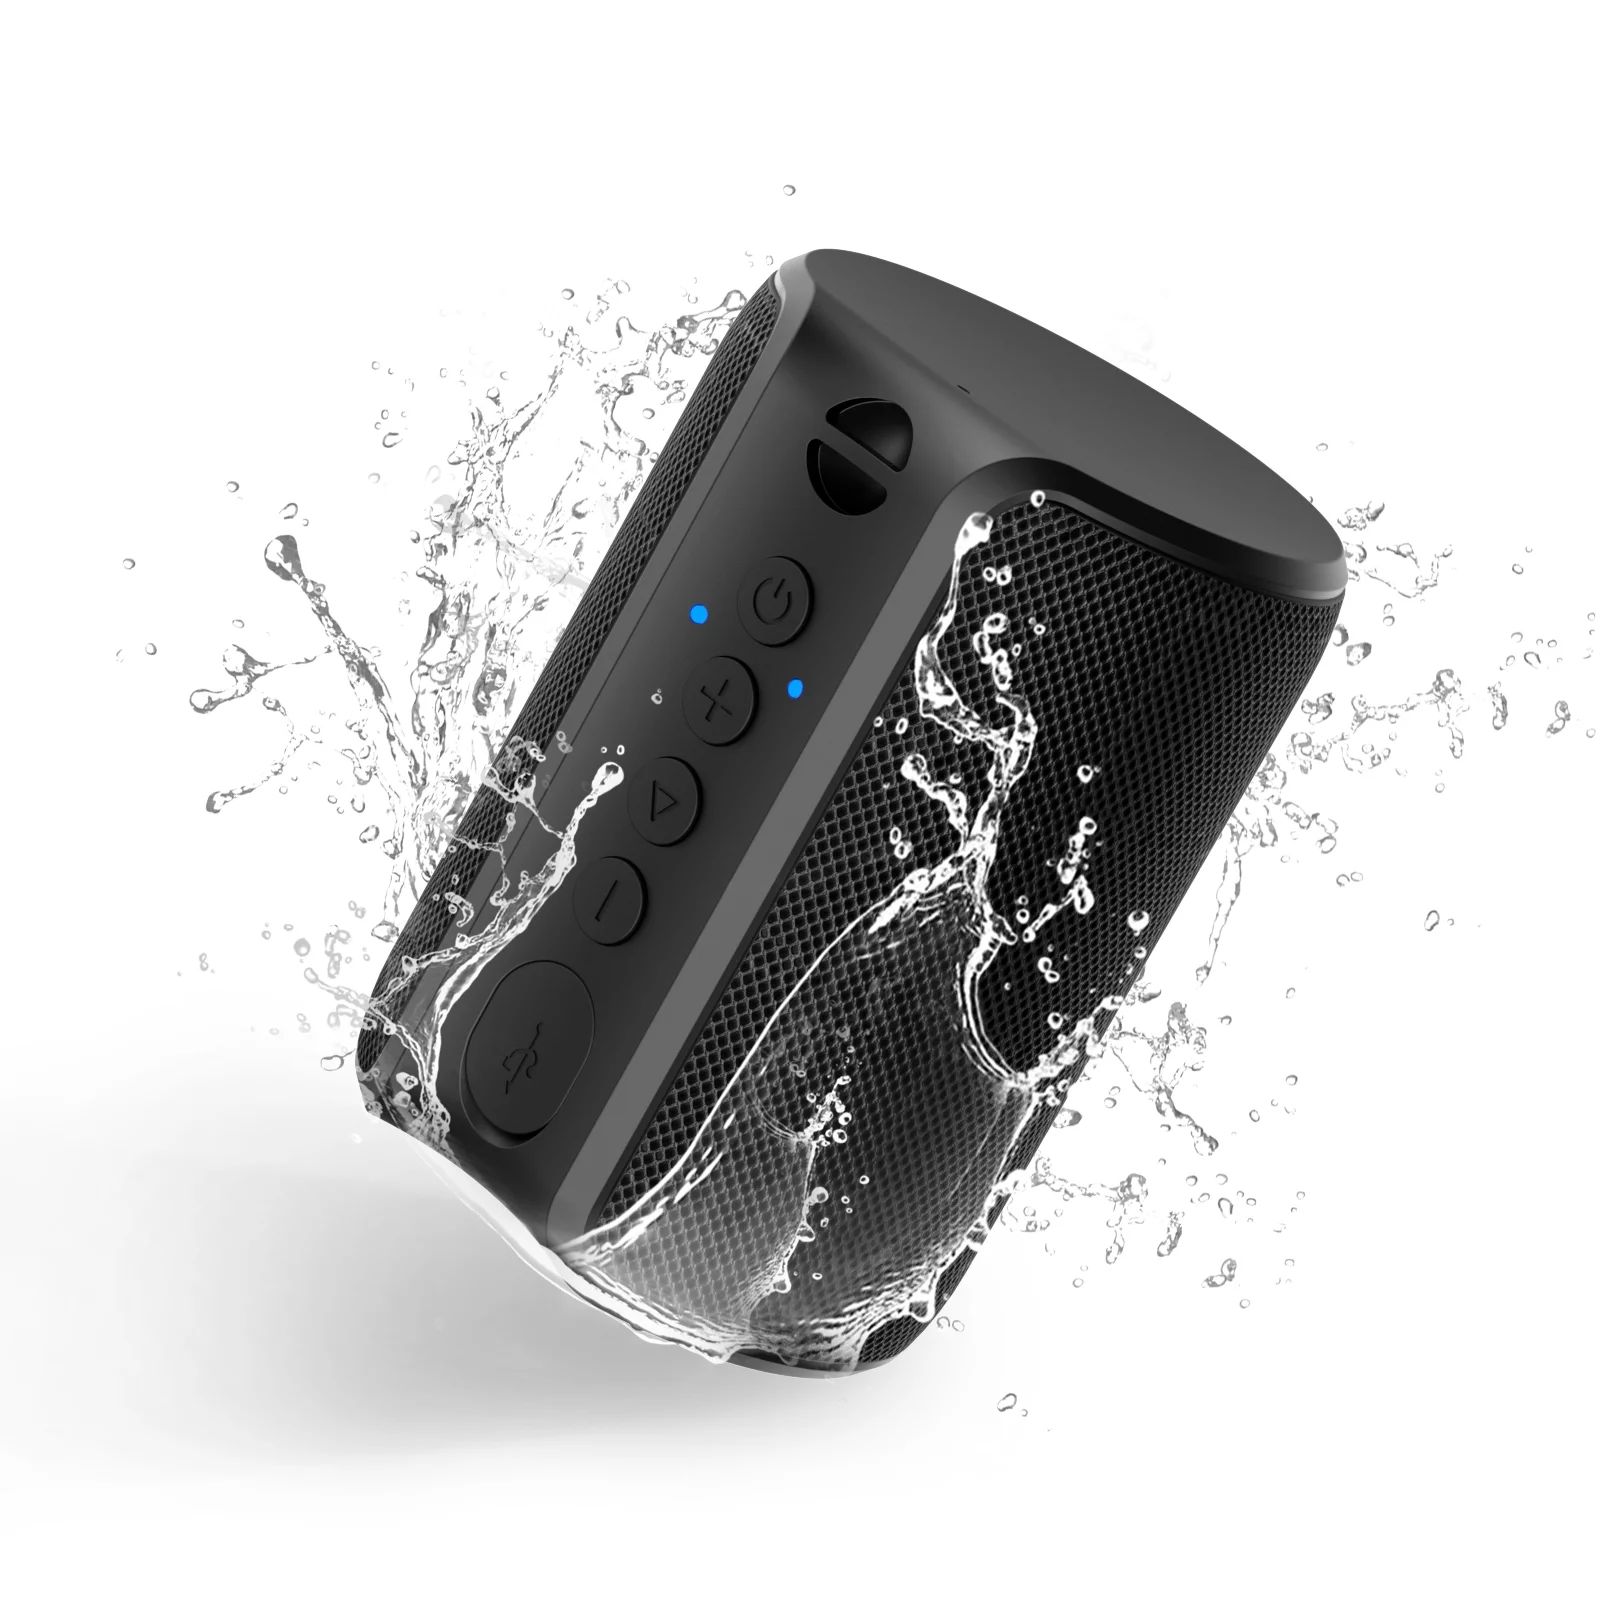 VILINICE Bluetooth Speakers Portable Wireless, IPX7 Waterproof Outdoor Speaker with Subwoofer, TW... | Walmart (US)